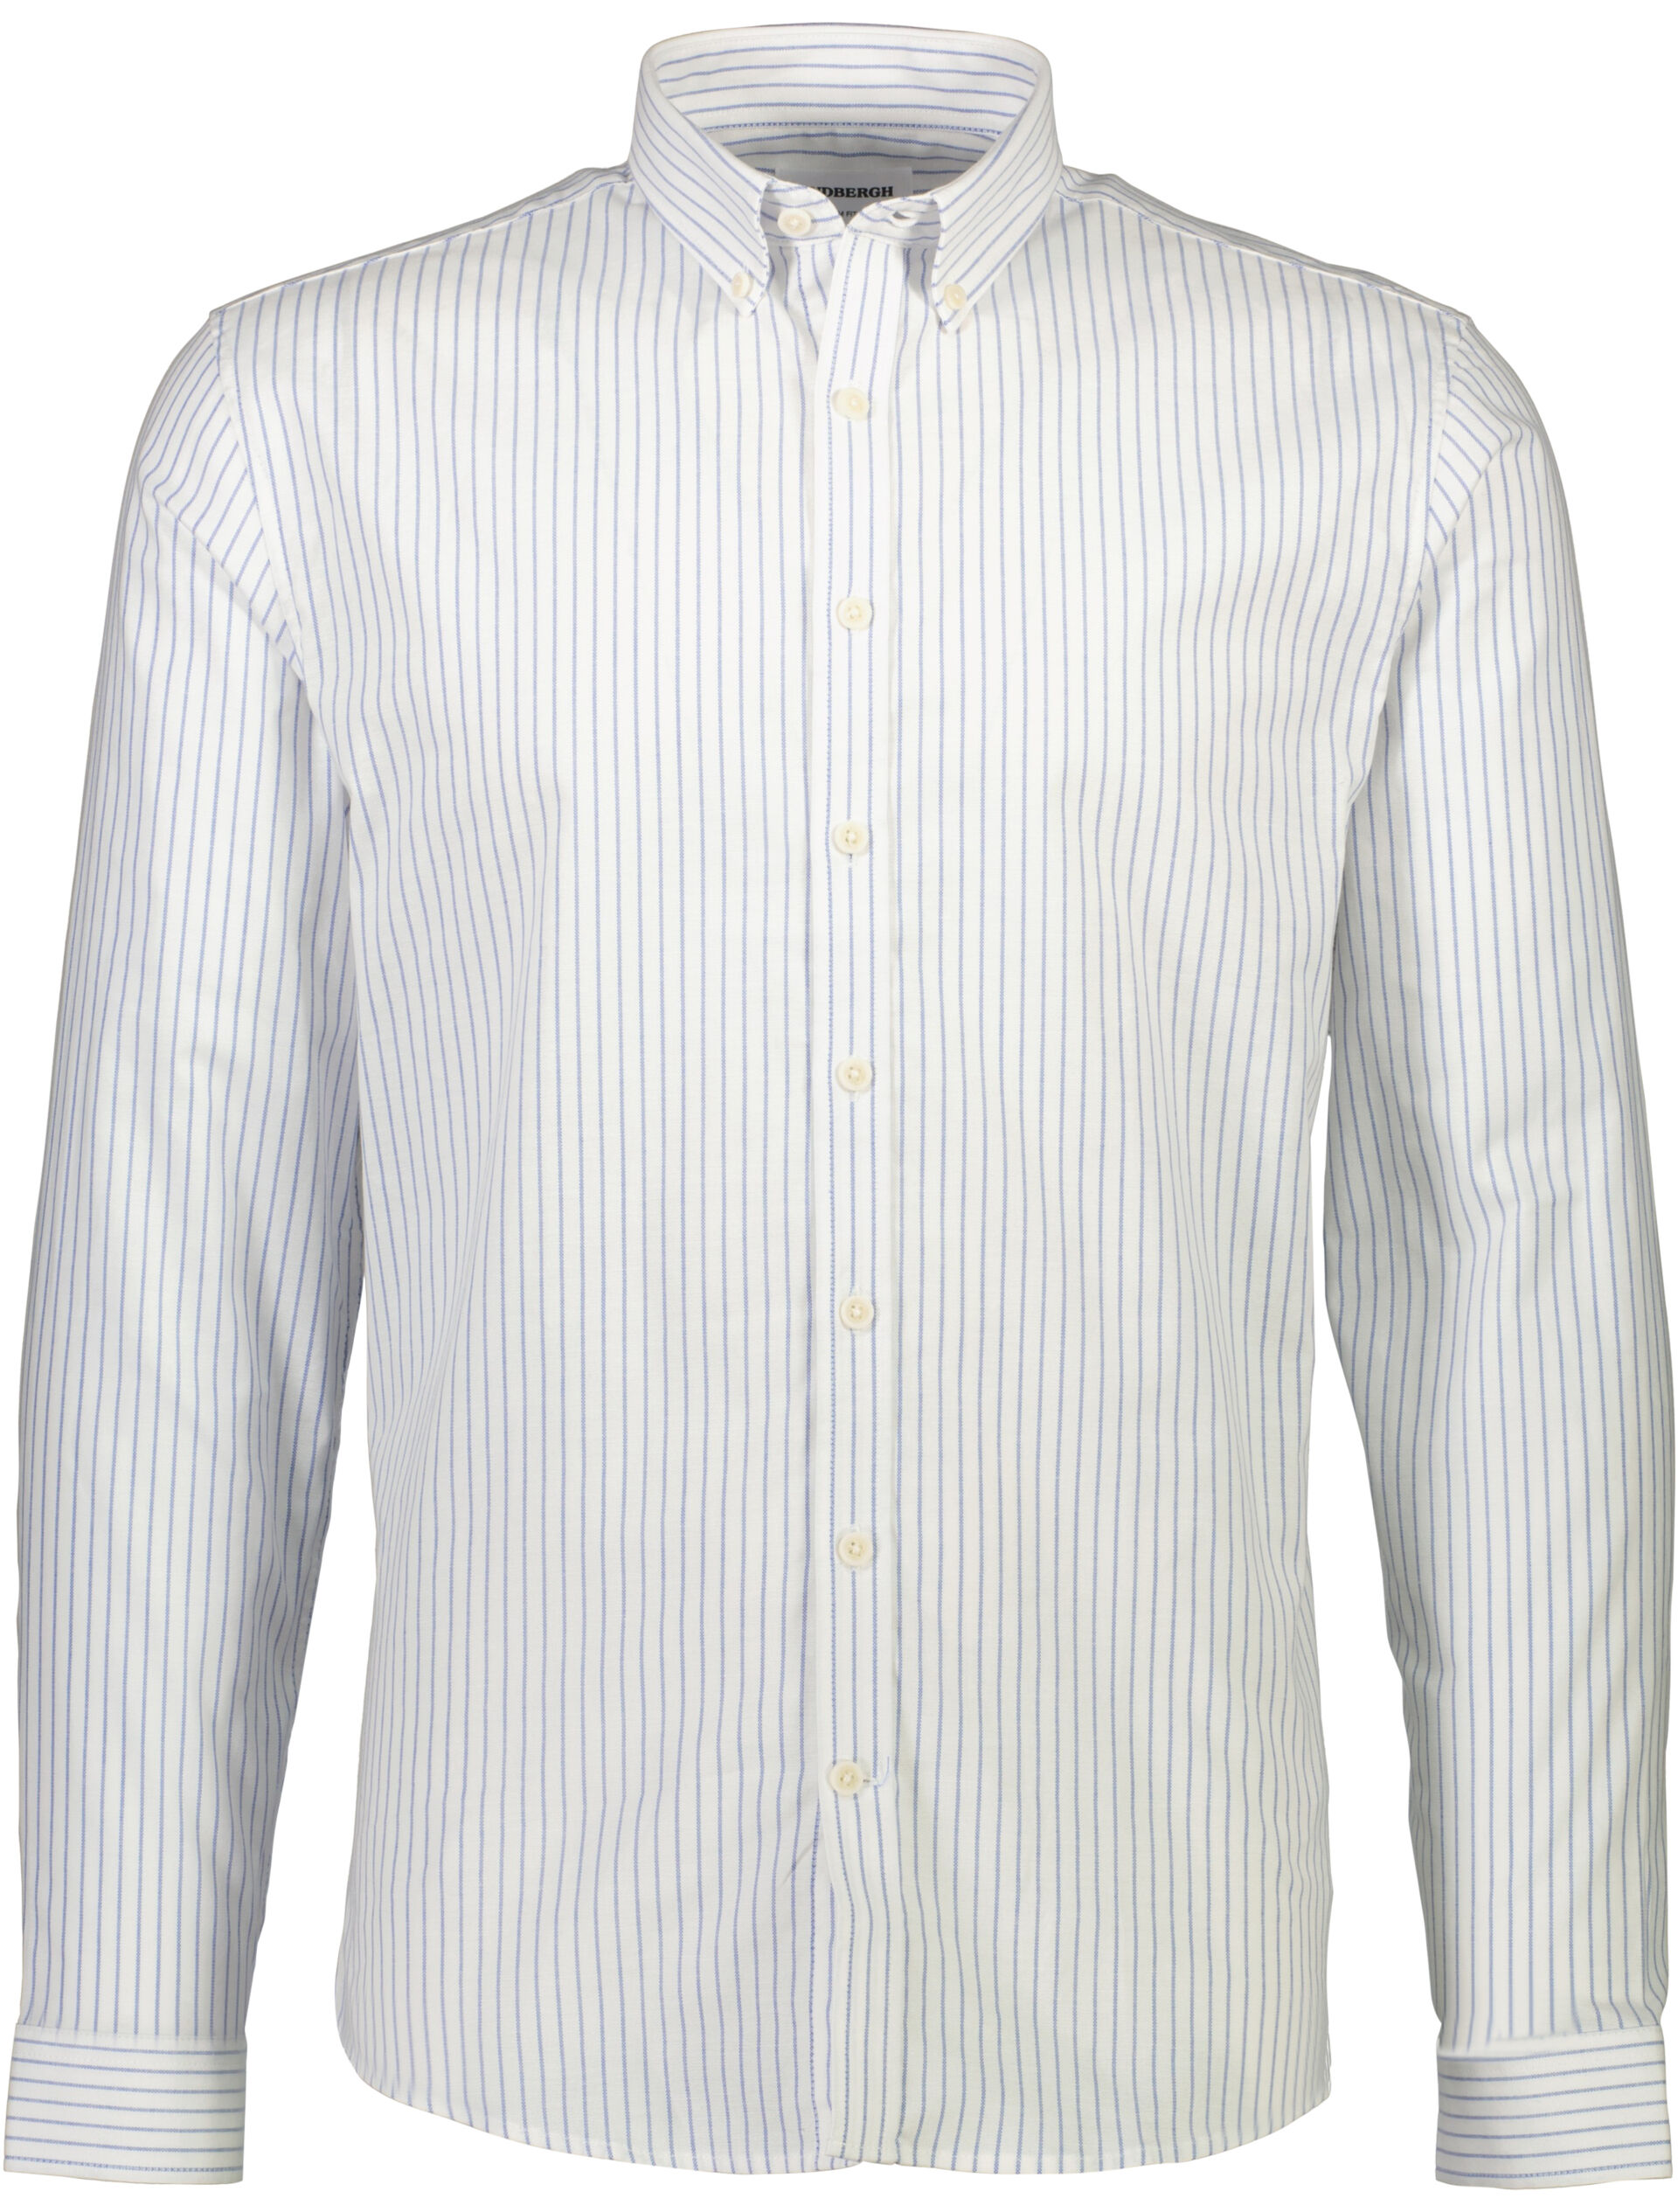 Oxford shirt 30-203536